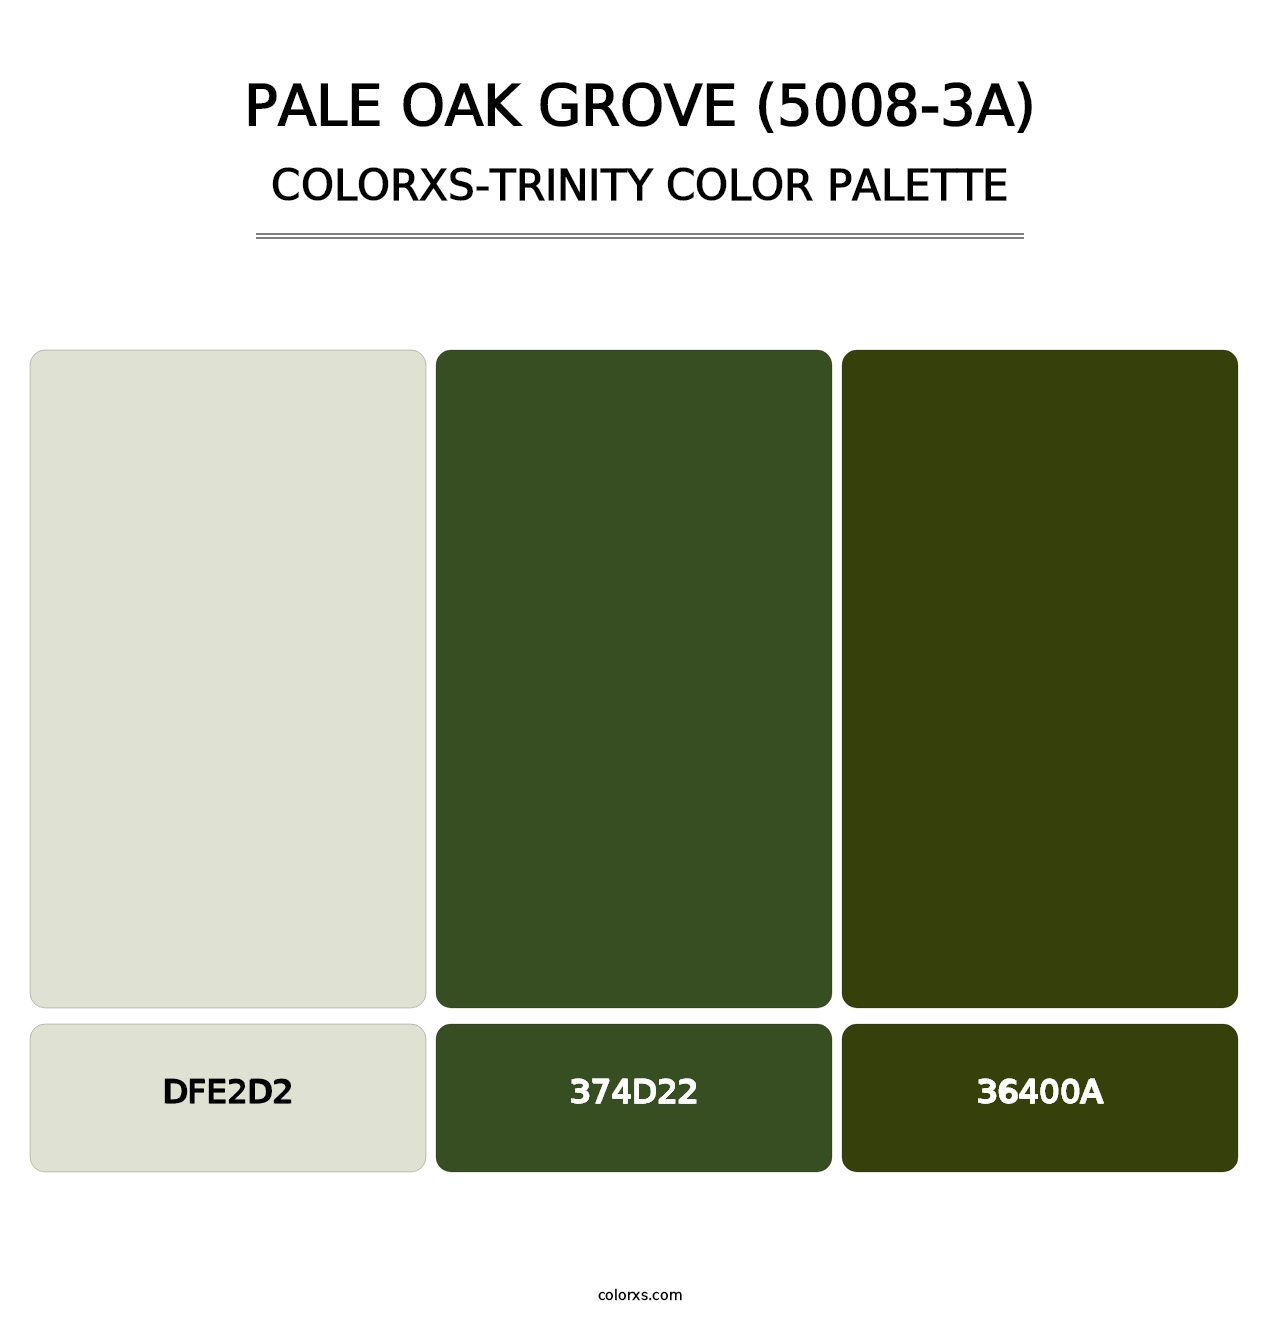 Pale Oak Grove (5008-3A) - Colorxs Trinity Palette